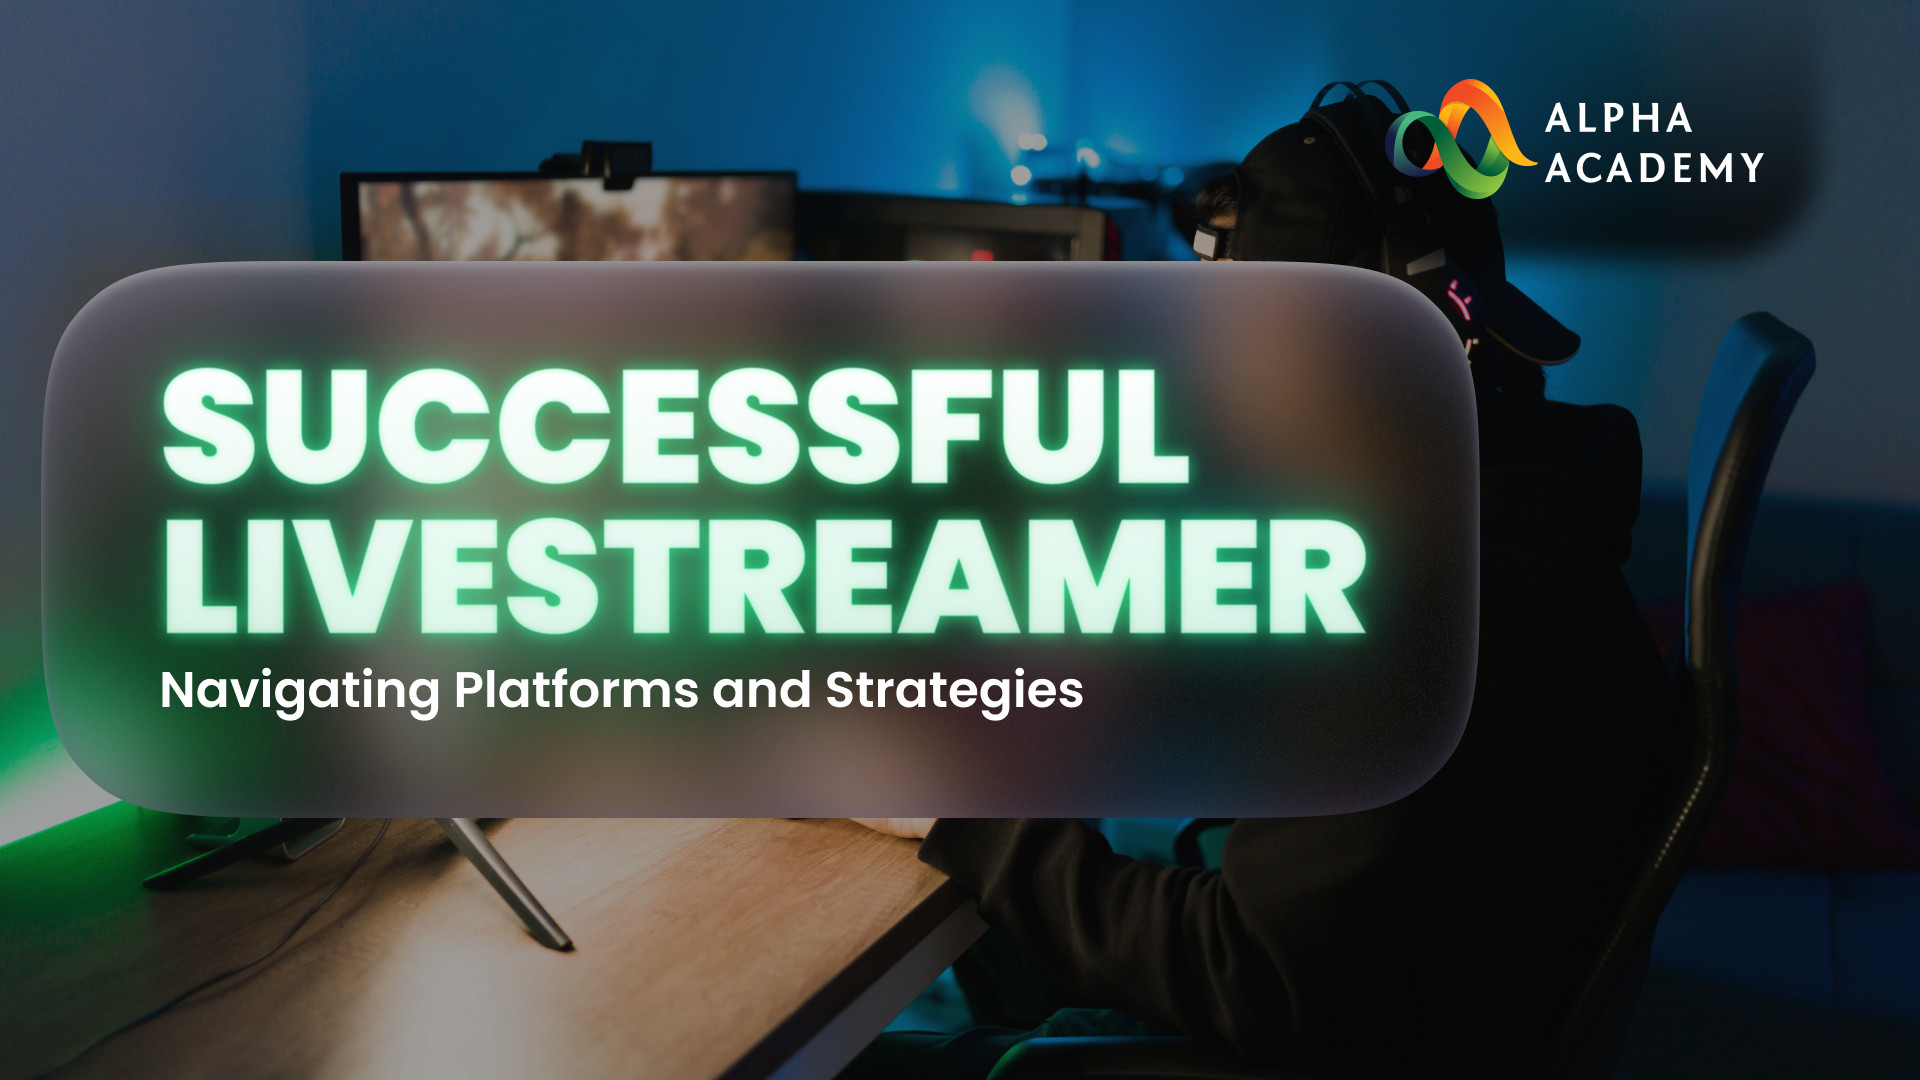 [$ 11.28] Successful Live streamer: Navigating Platforms and Strategies eLearning Bundle Alpha Academy Code